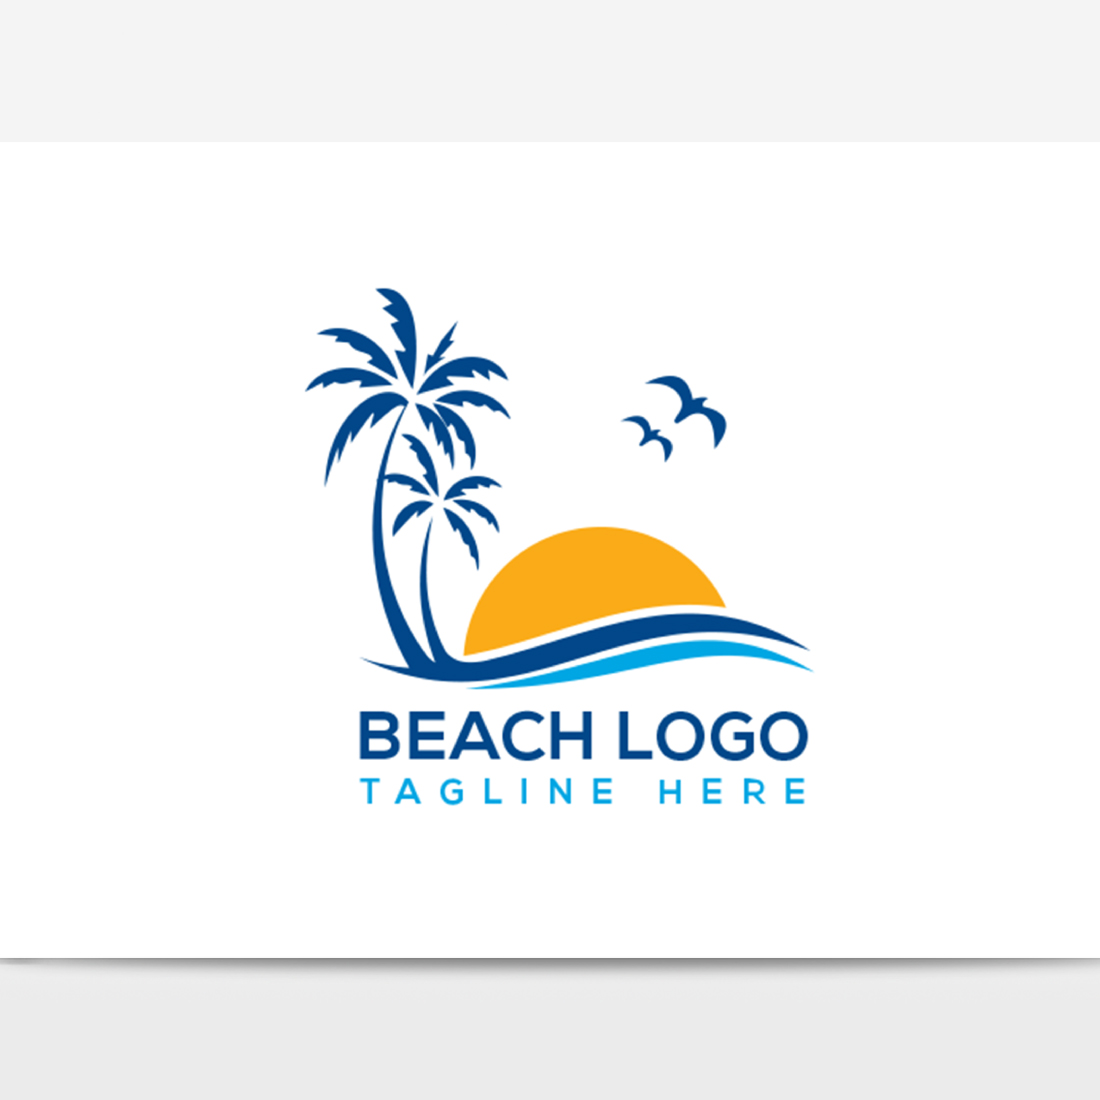 Modern Beach Logo Vector Graphics cover image.